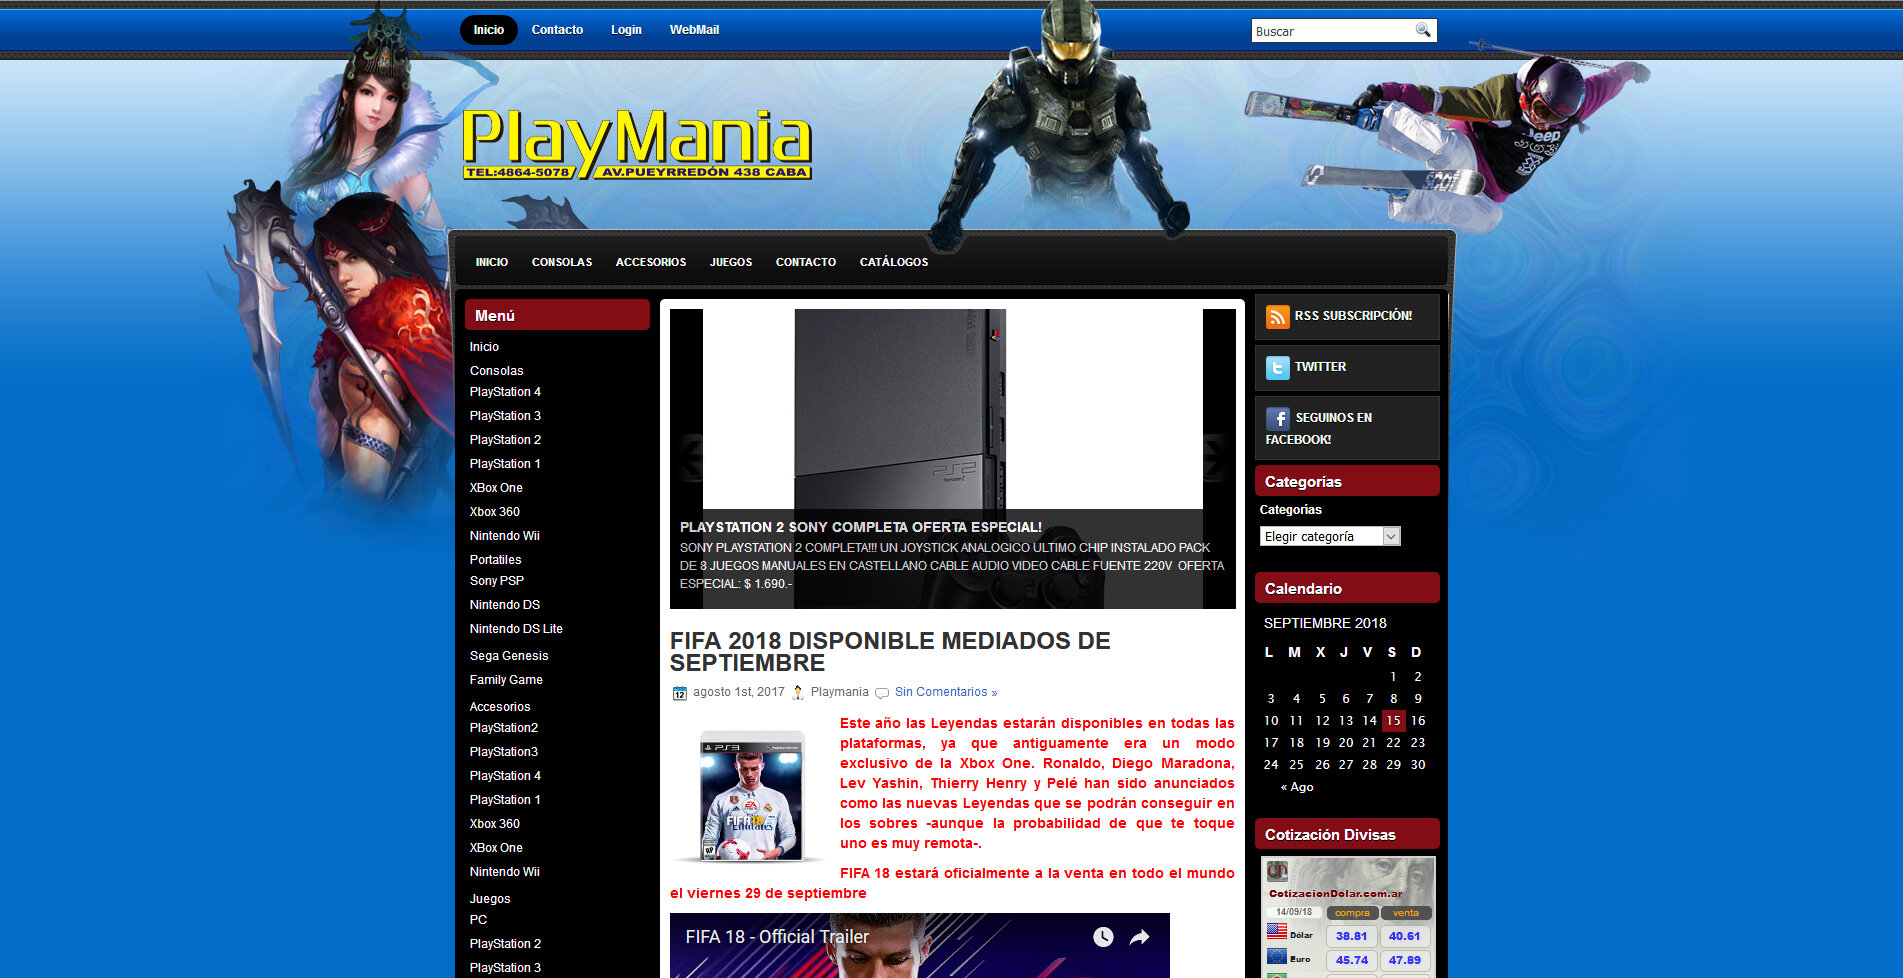 <a href="https://playmaniagames.com.ar/">Visitar sitio</a>